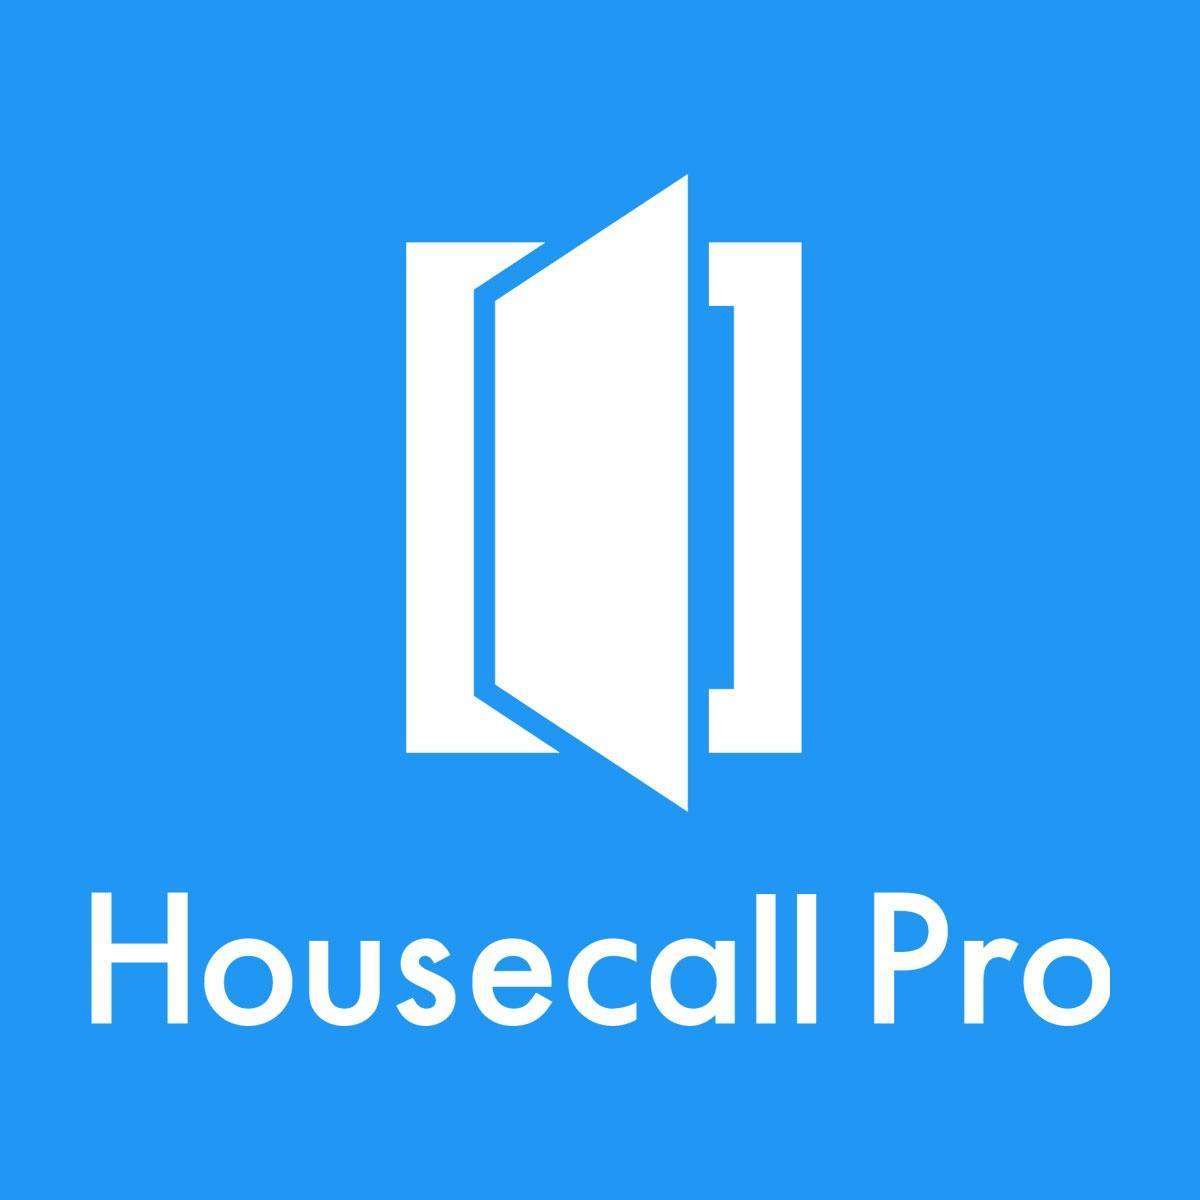 HouseCall Pro Logo